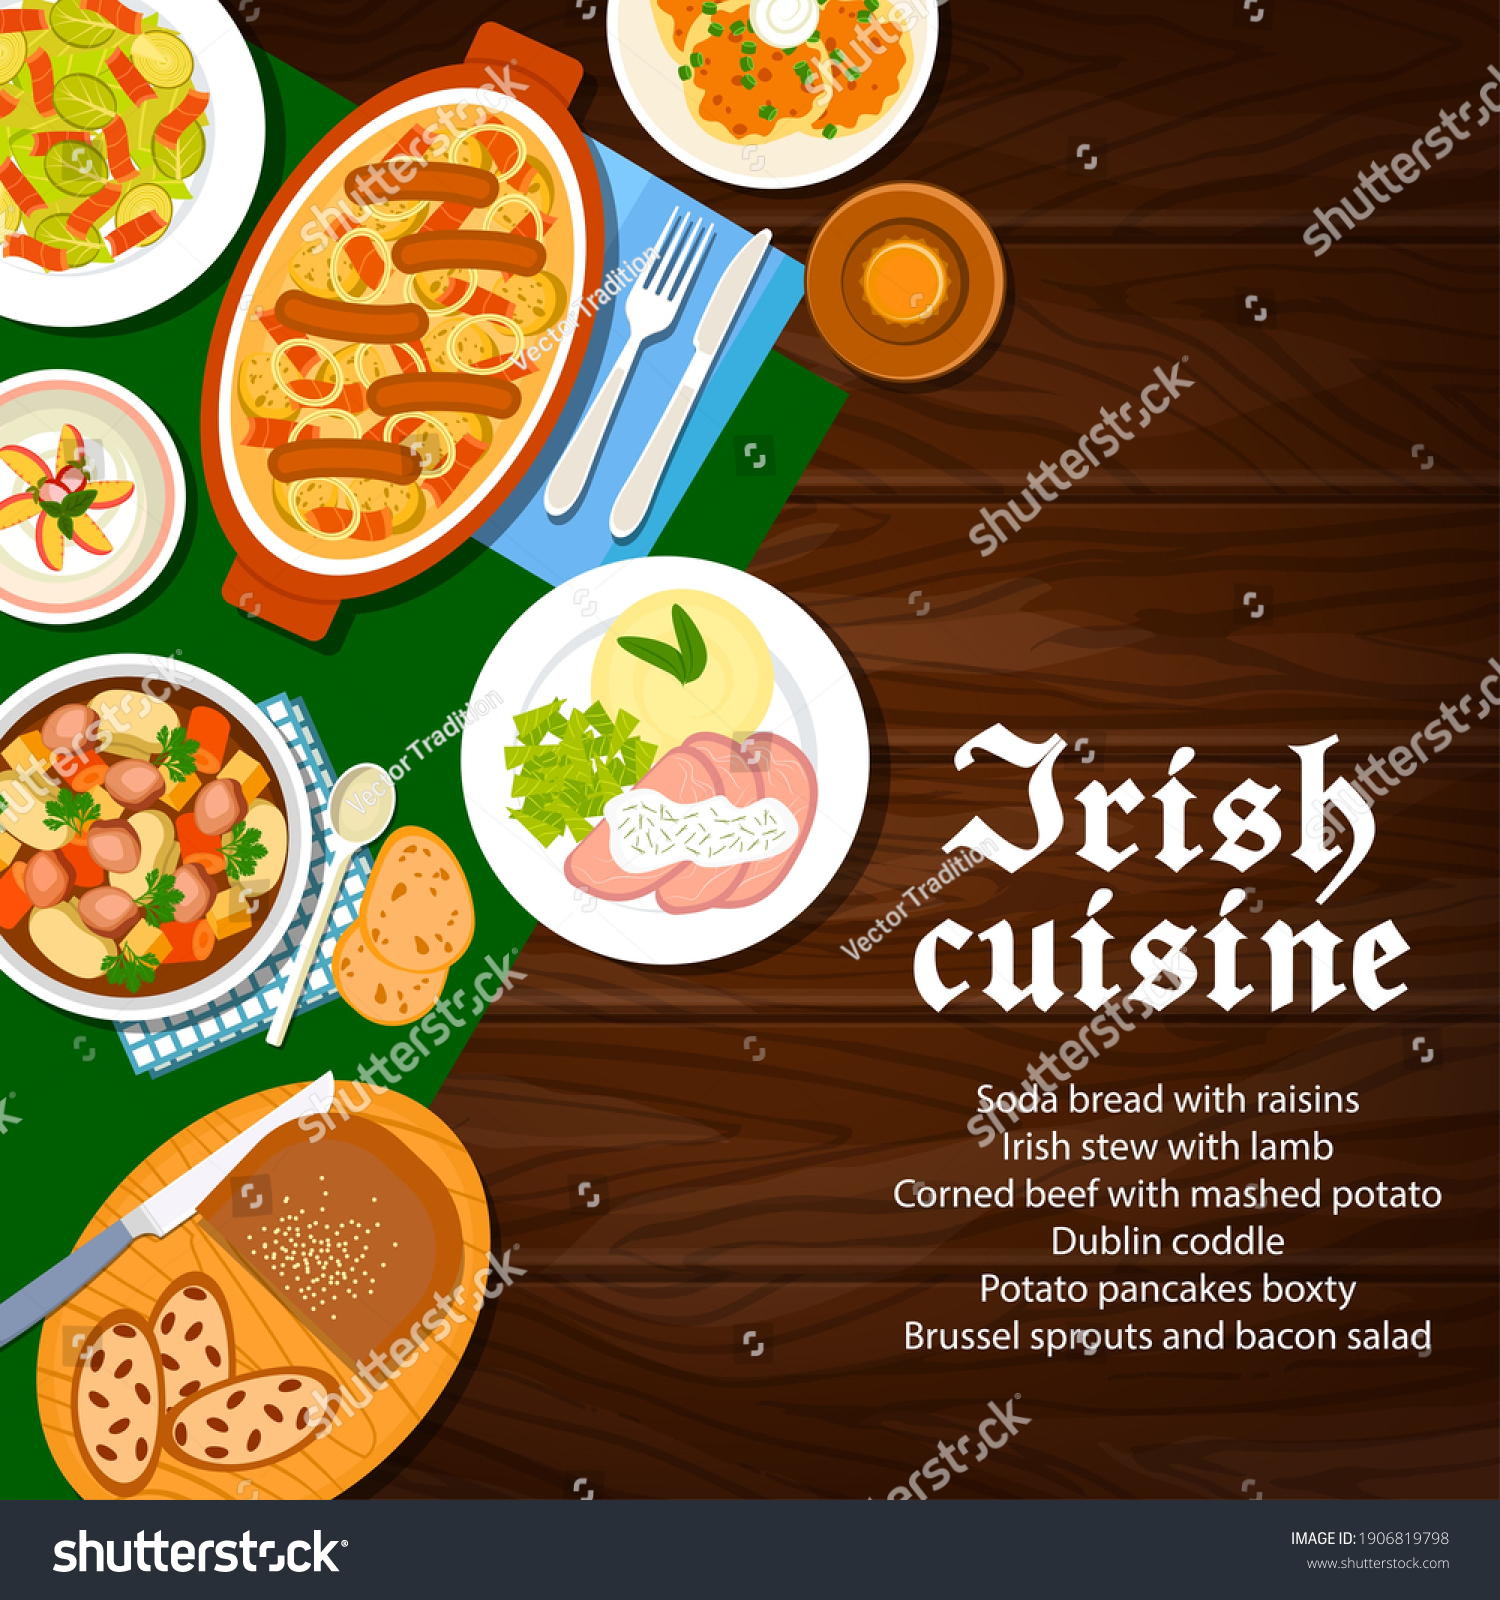 SVG of Irish cuisine food menu dishes, Ireland breakfast meals, vector breakfast bread with raisins, pudding and stew. Irish cuisine and restaurant menu food corned beef with mashed potato and Irish coffee svg